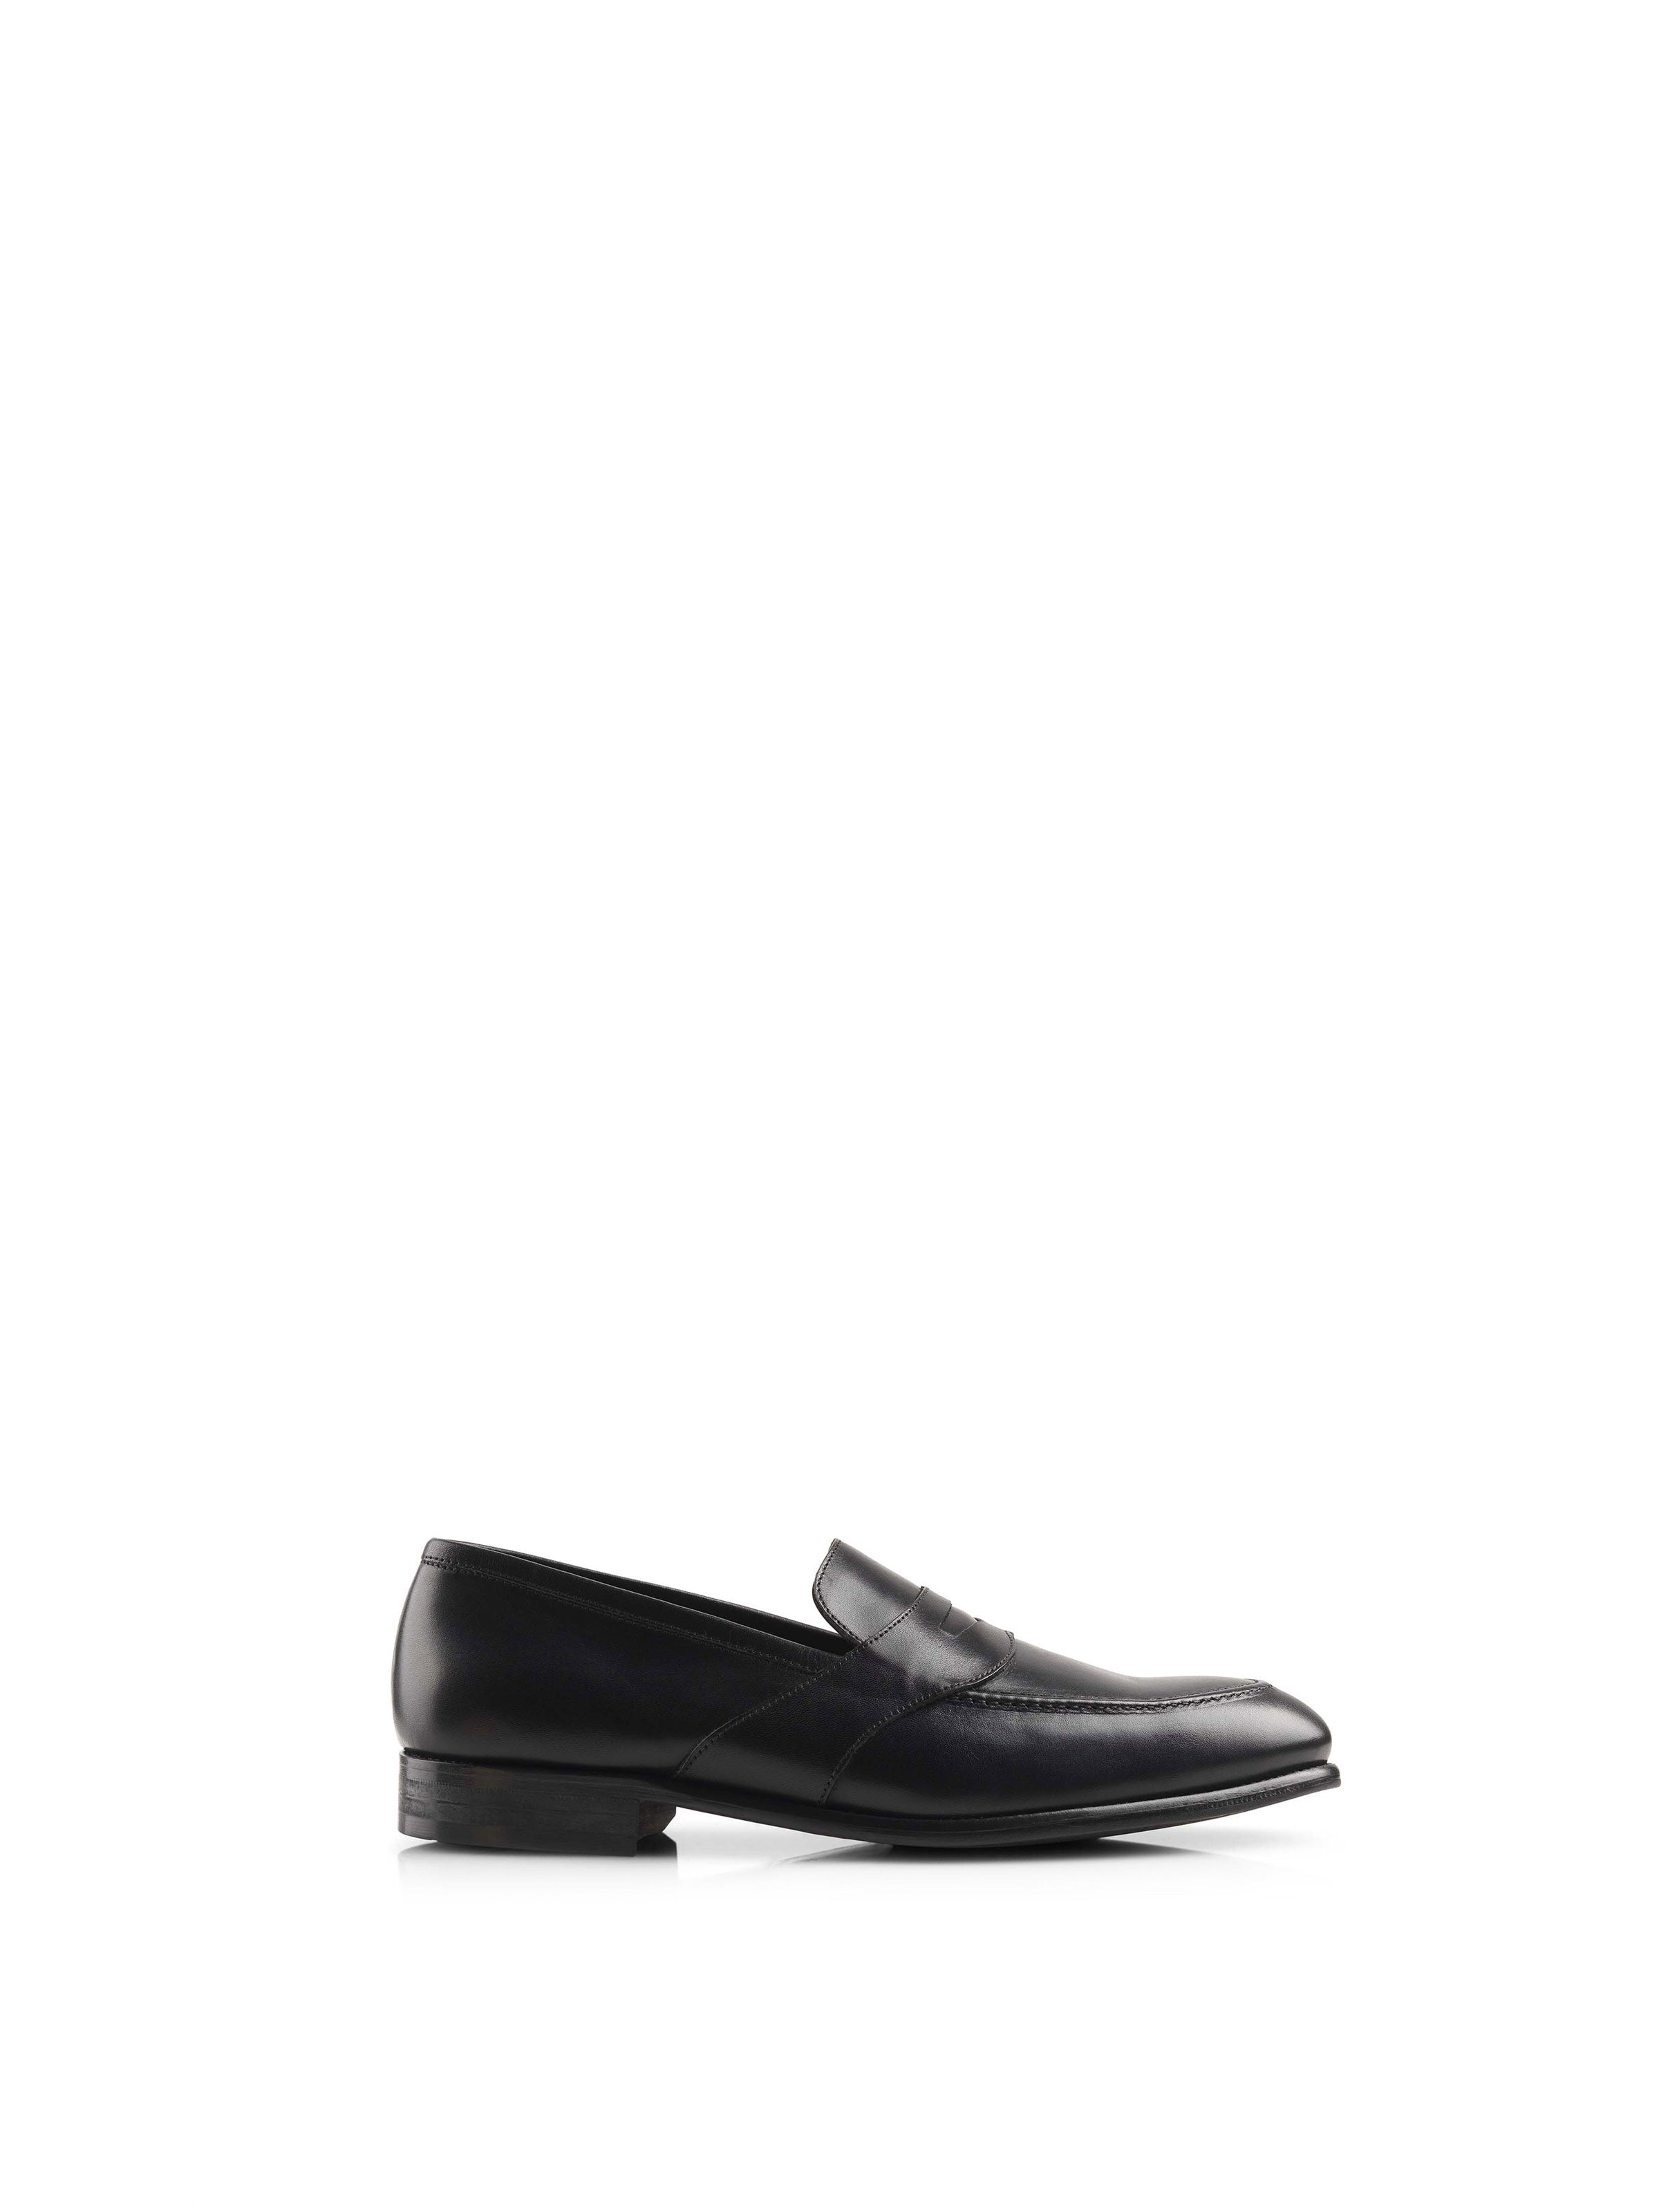 Balmoral - Men's Loafer in Black Leather | Fairfax & Favor